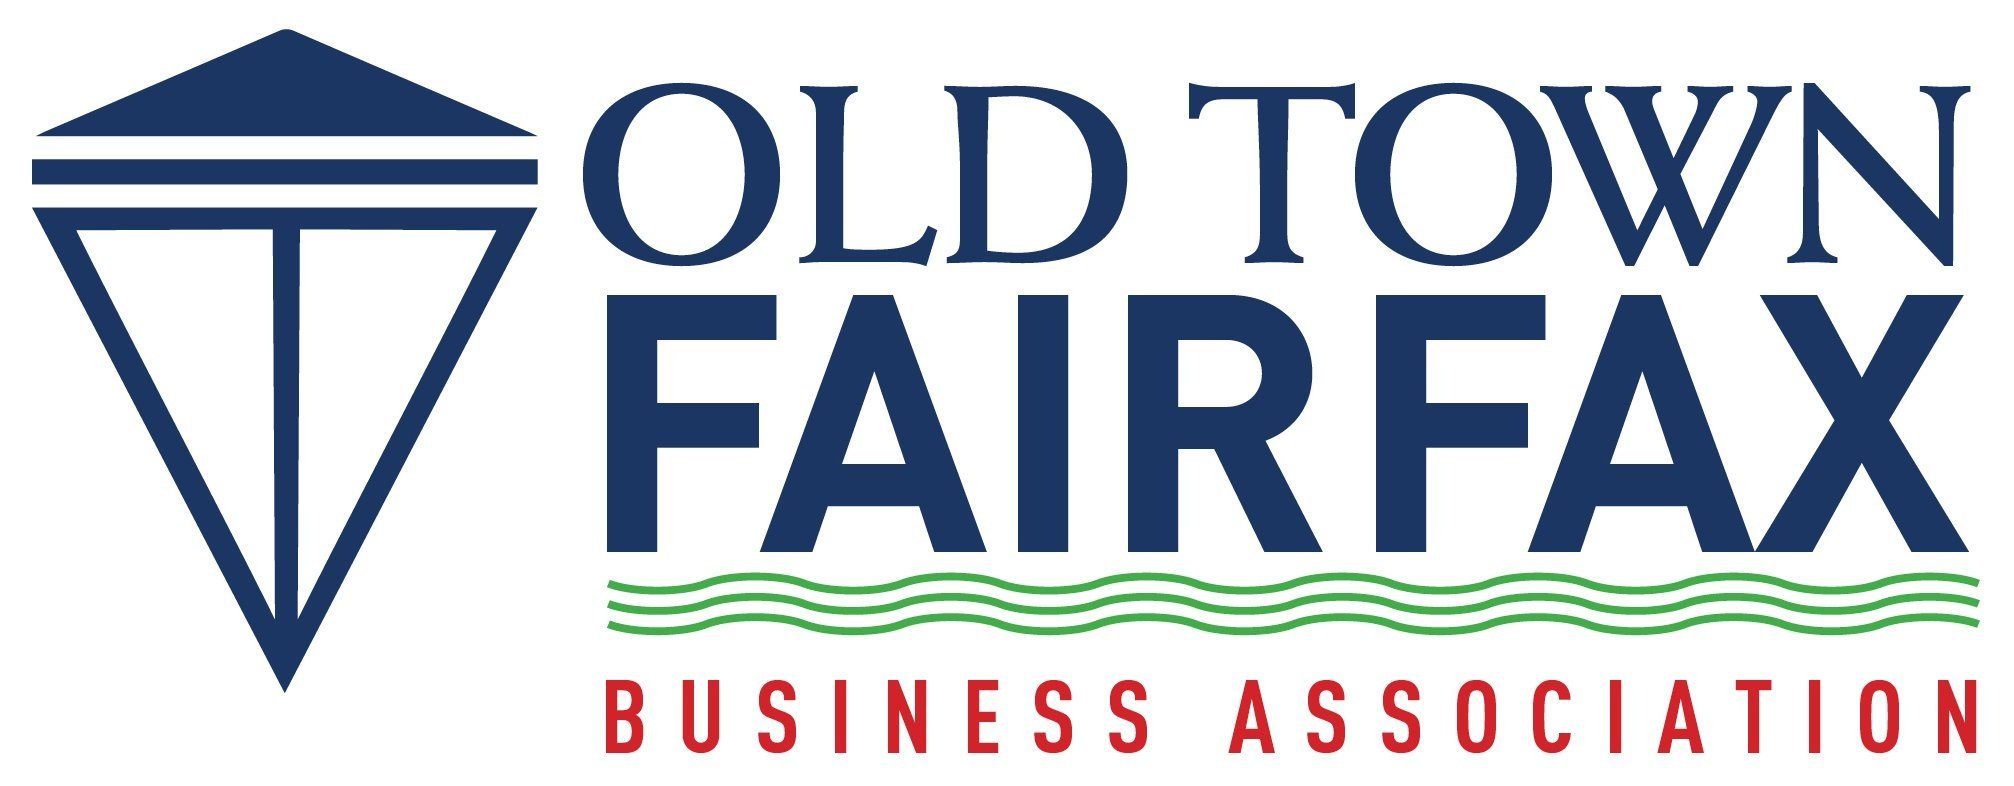 Old Town Fairfax Business Association